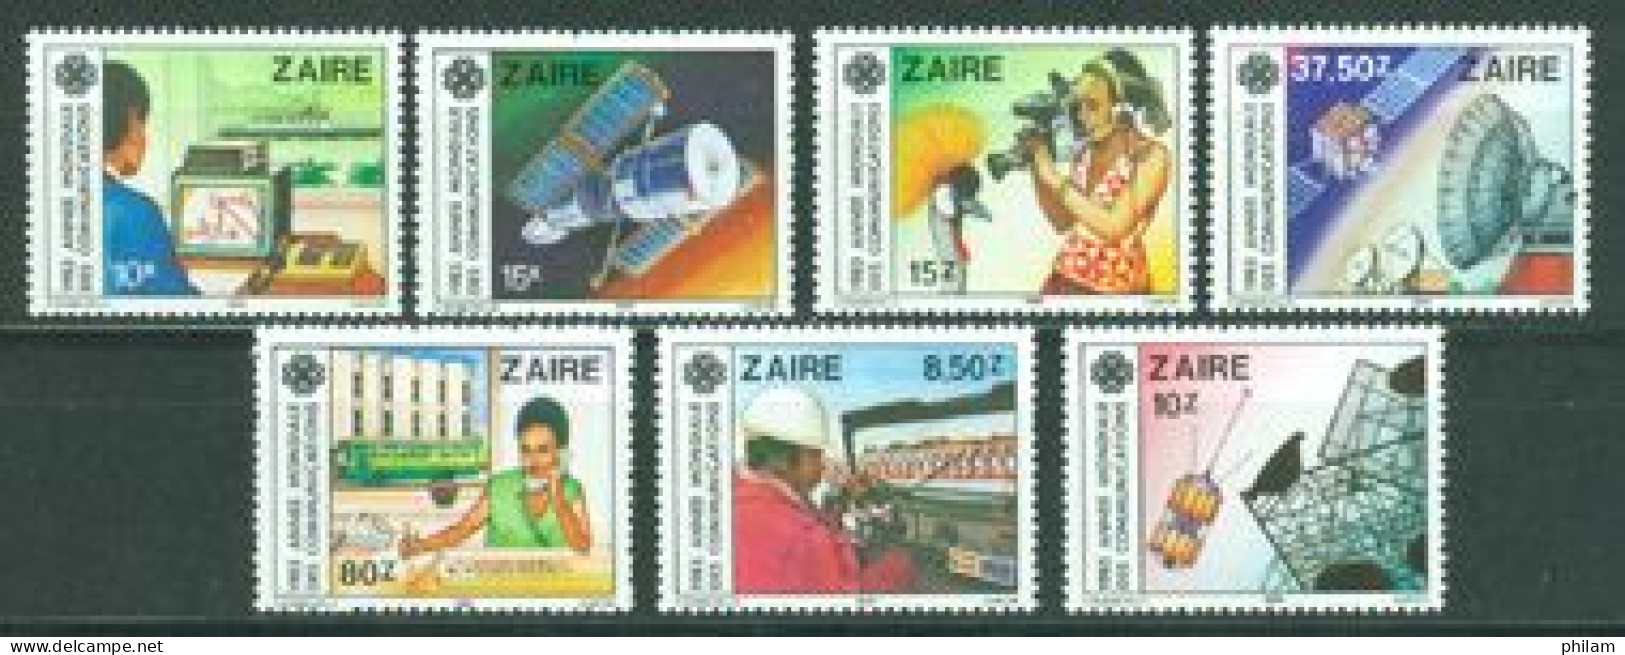 ZAIRE 1984- Année Des Communications - 7 V. - Afrika